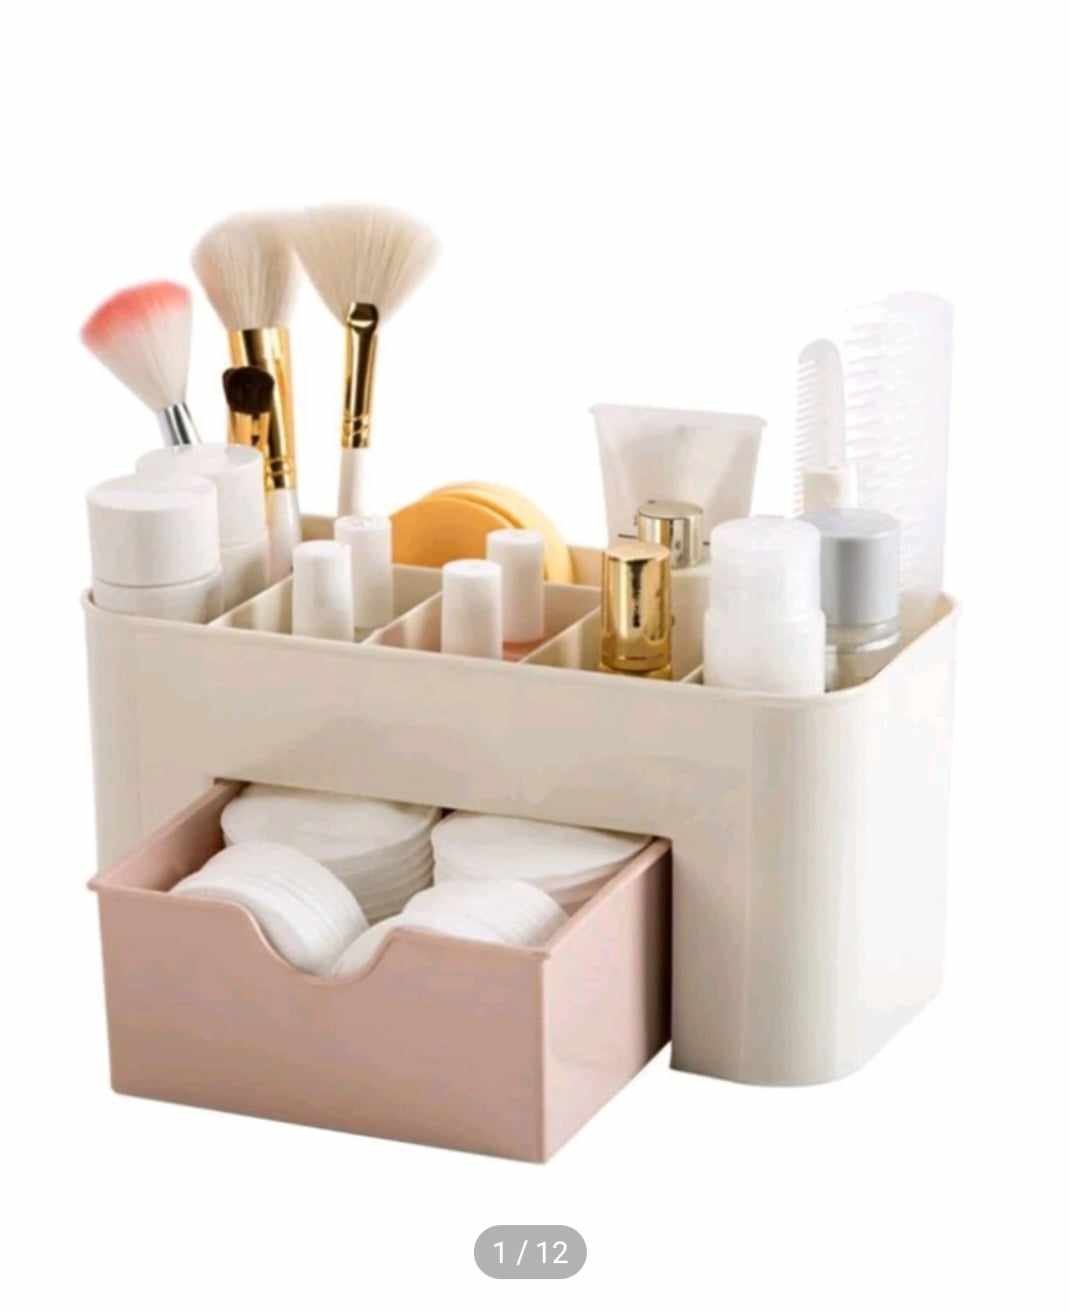 1pc Pink Desktop Drawer Style Mini Storage Cabinet, Makeup